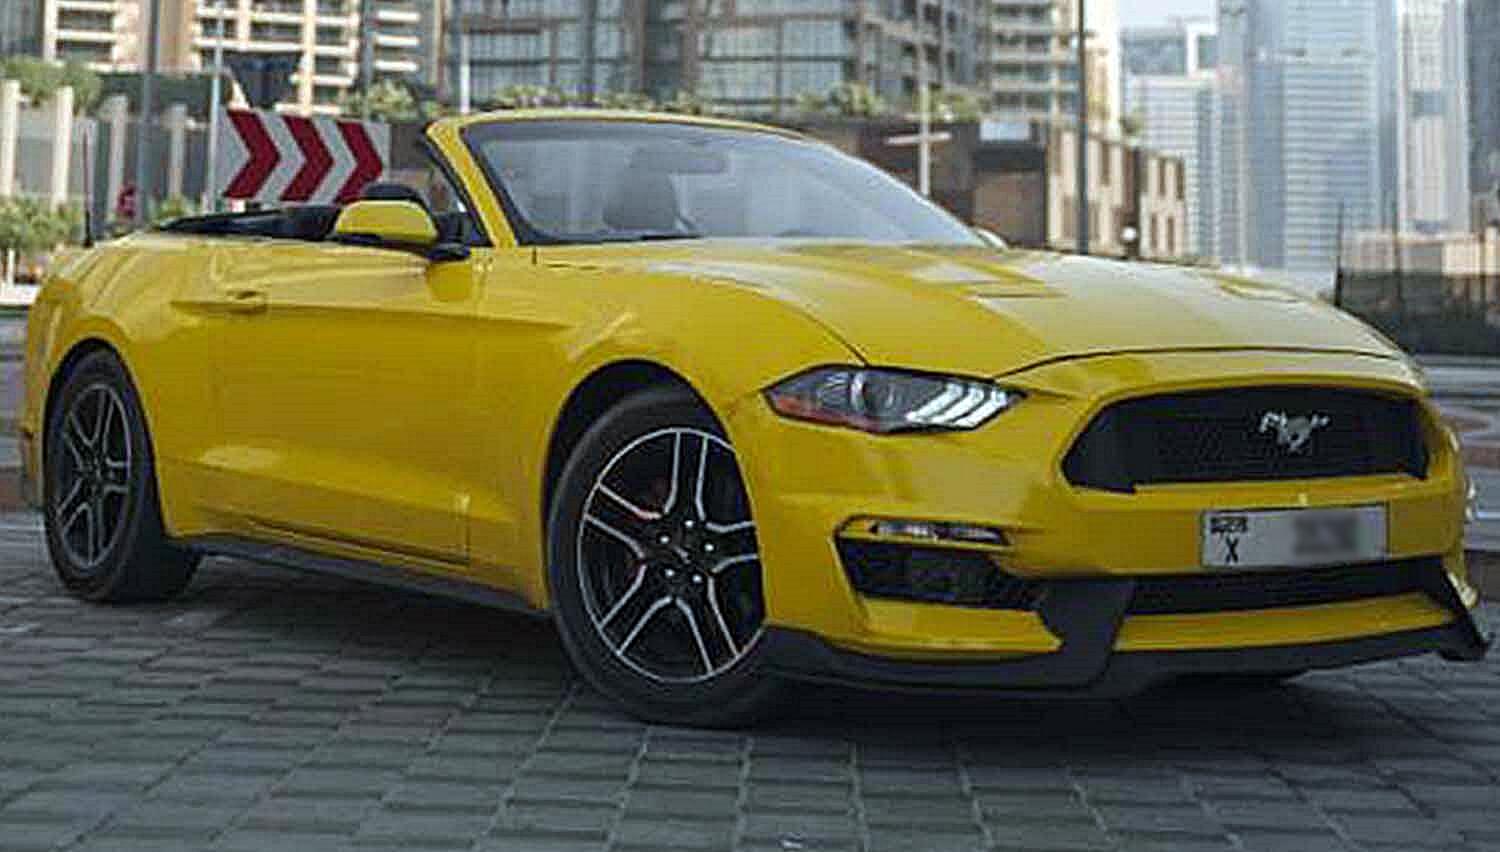 Ford Mustang Convertible Car Rental Dubai